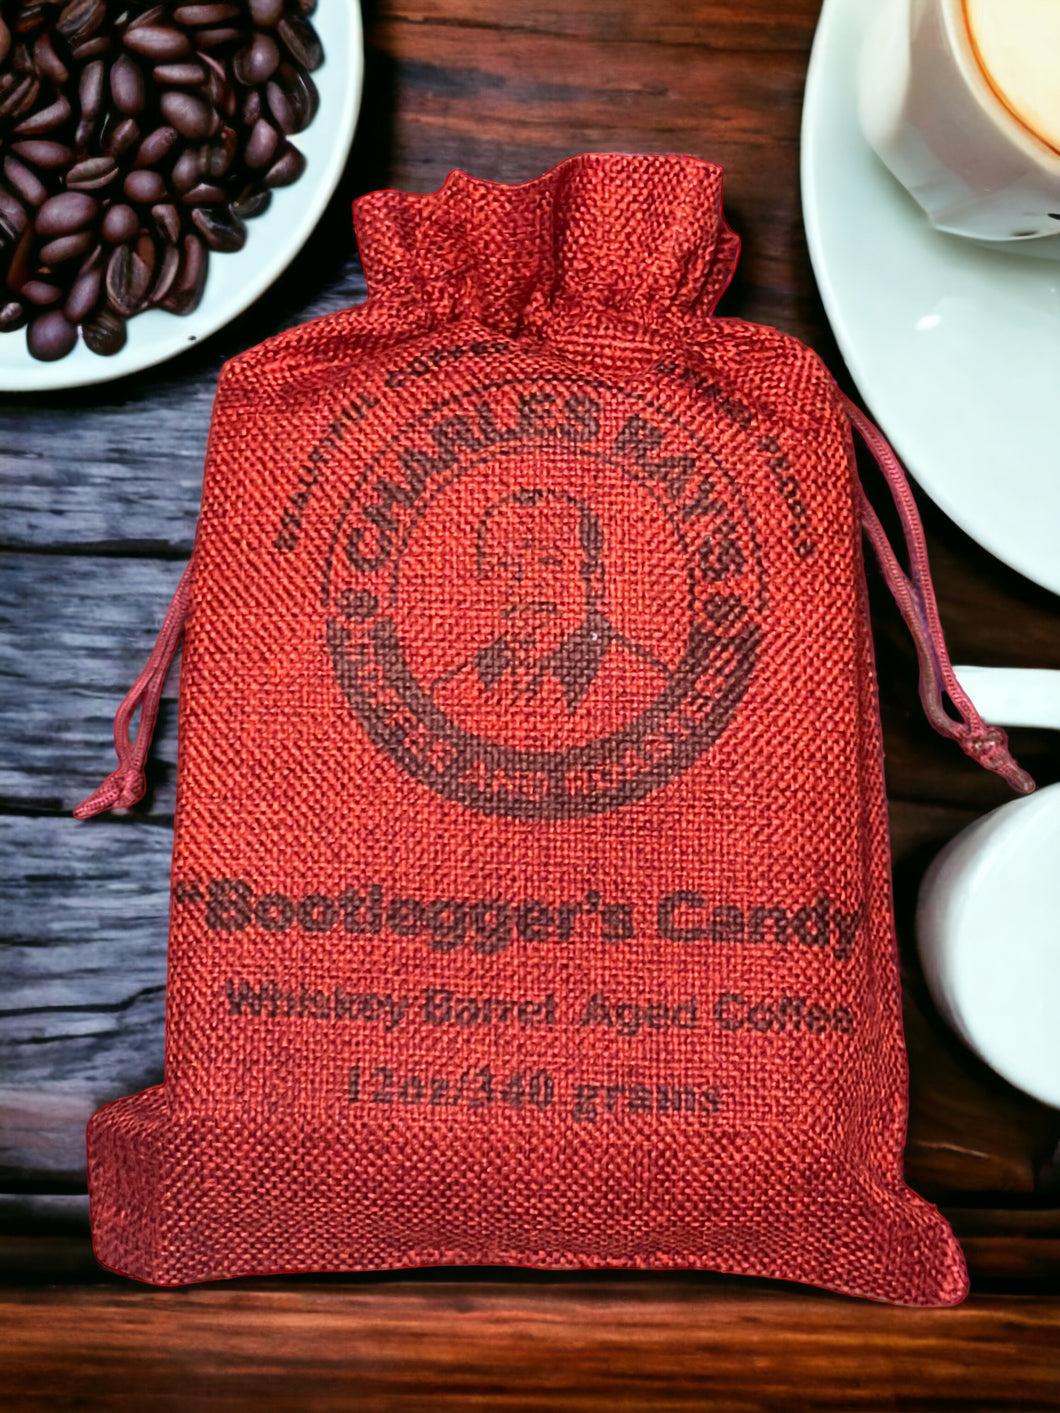 Bootlegger's Candy (Bourbon Barrel-Aged Coffee)